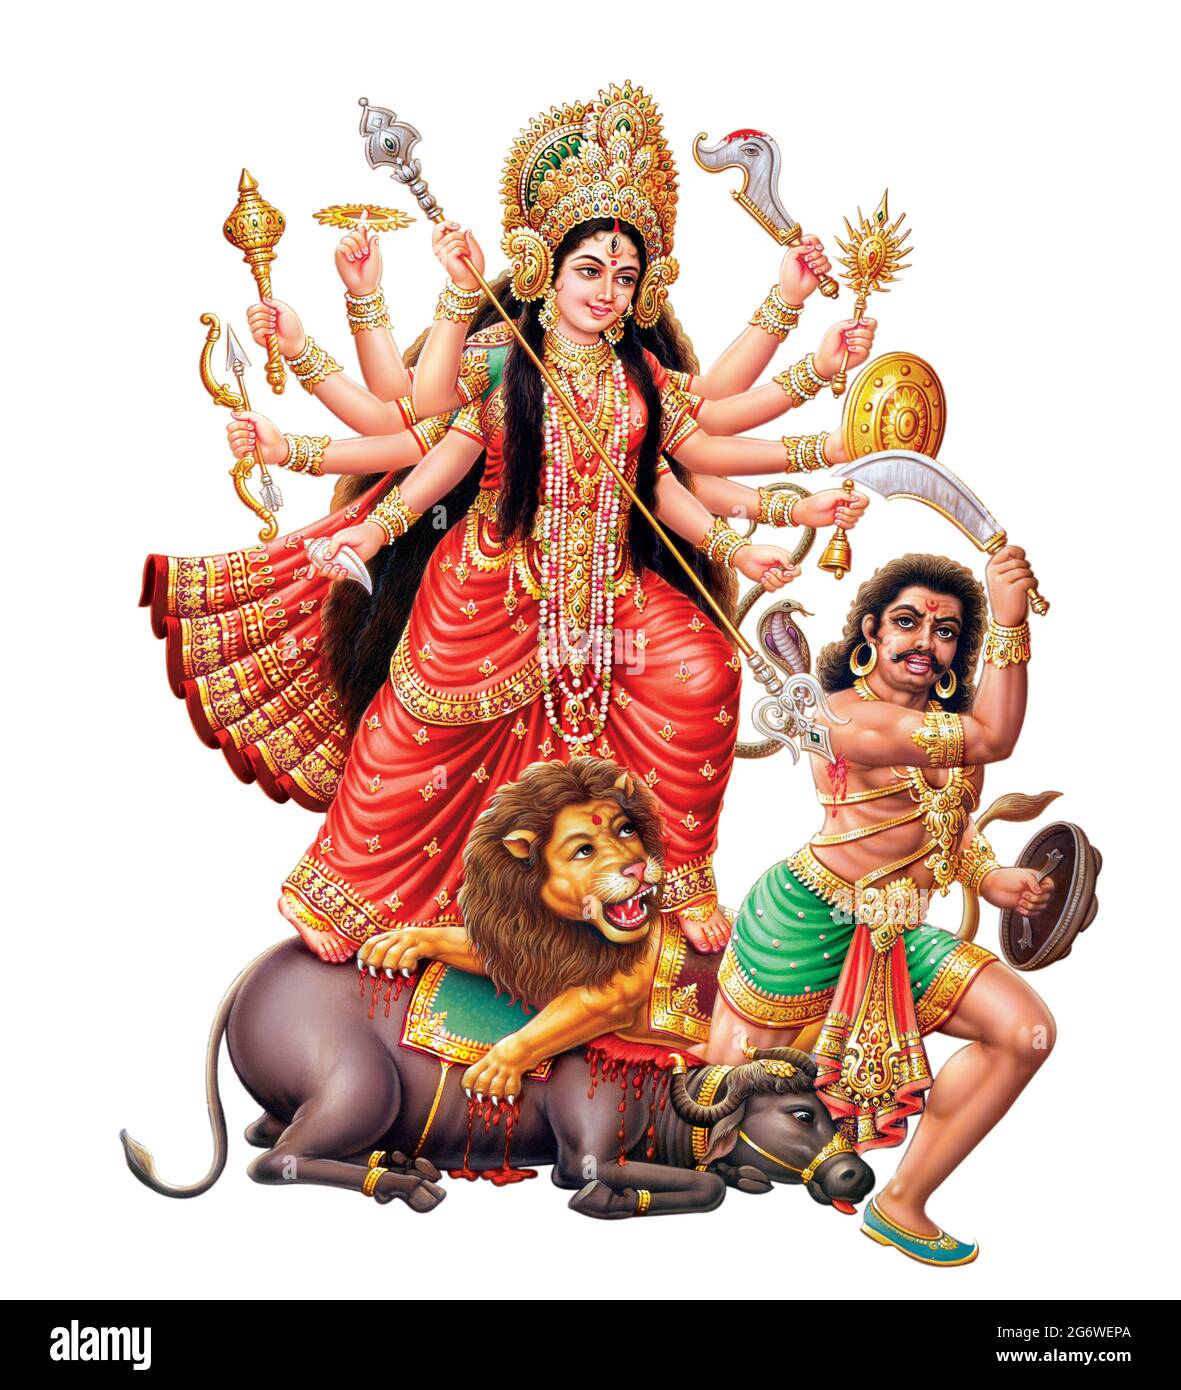 Hindu Festival Goddess Durga High-Resolution photo Stock Photo - Alamy